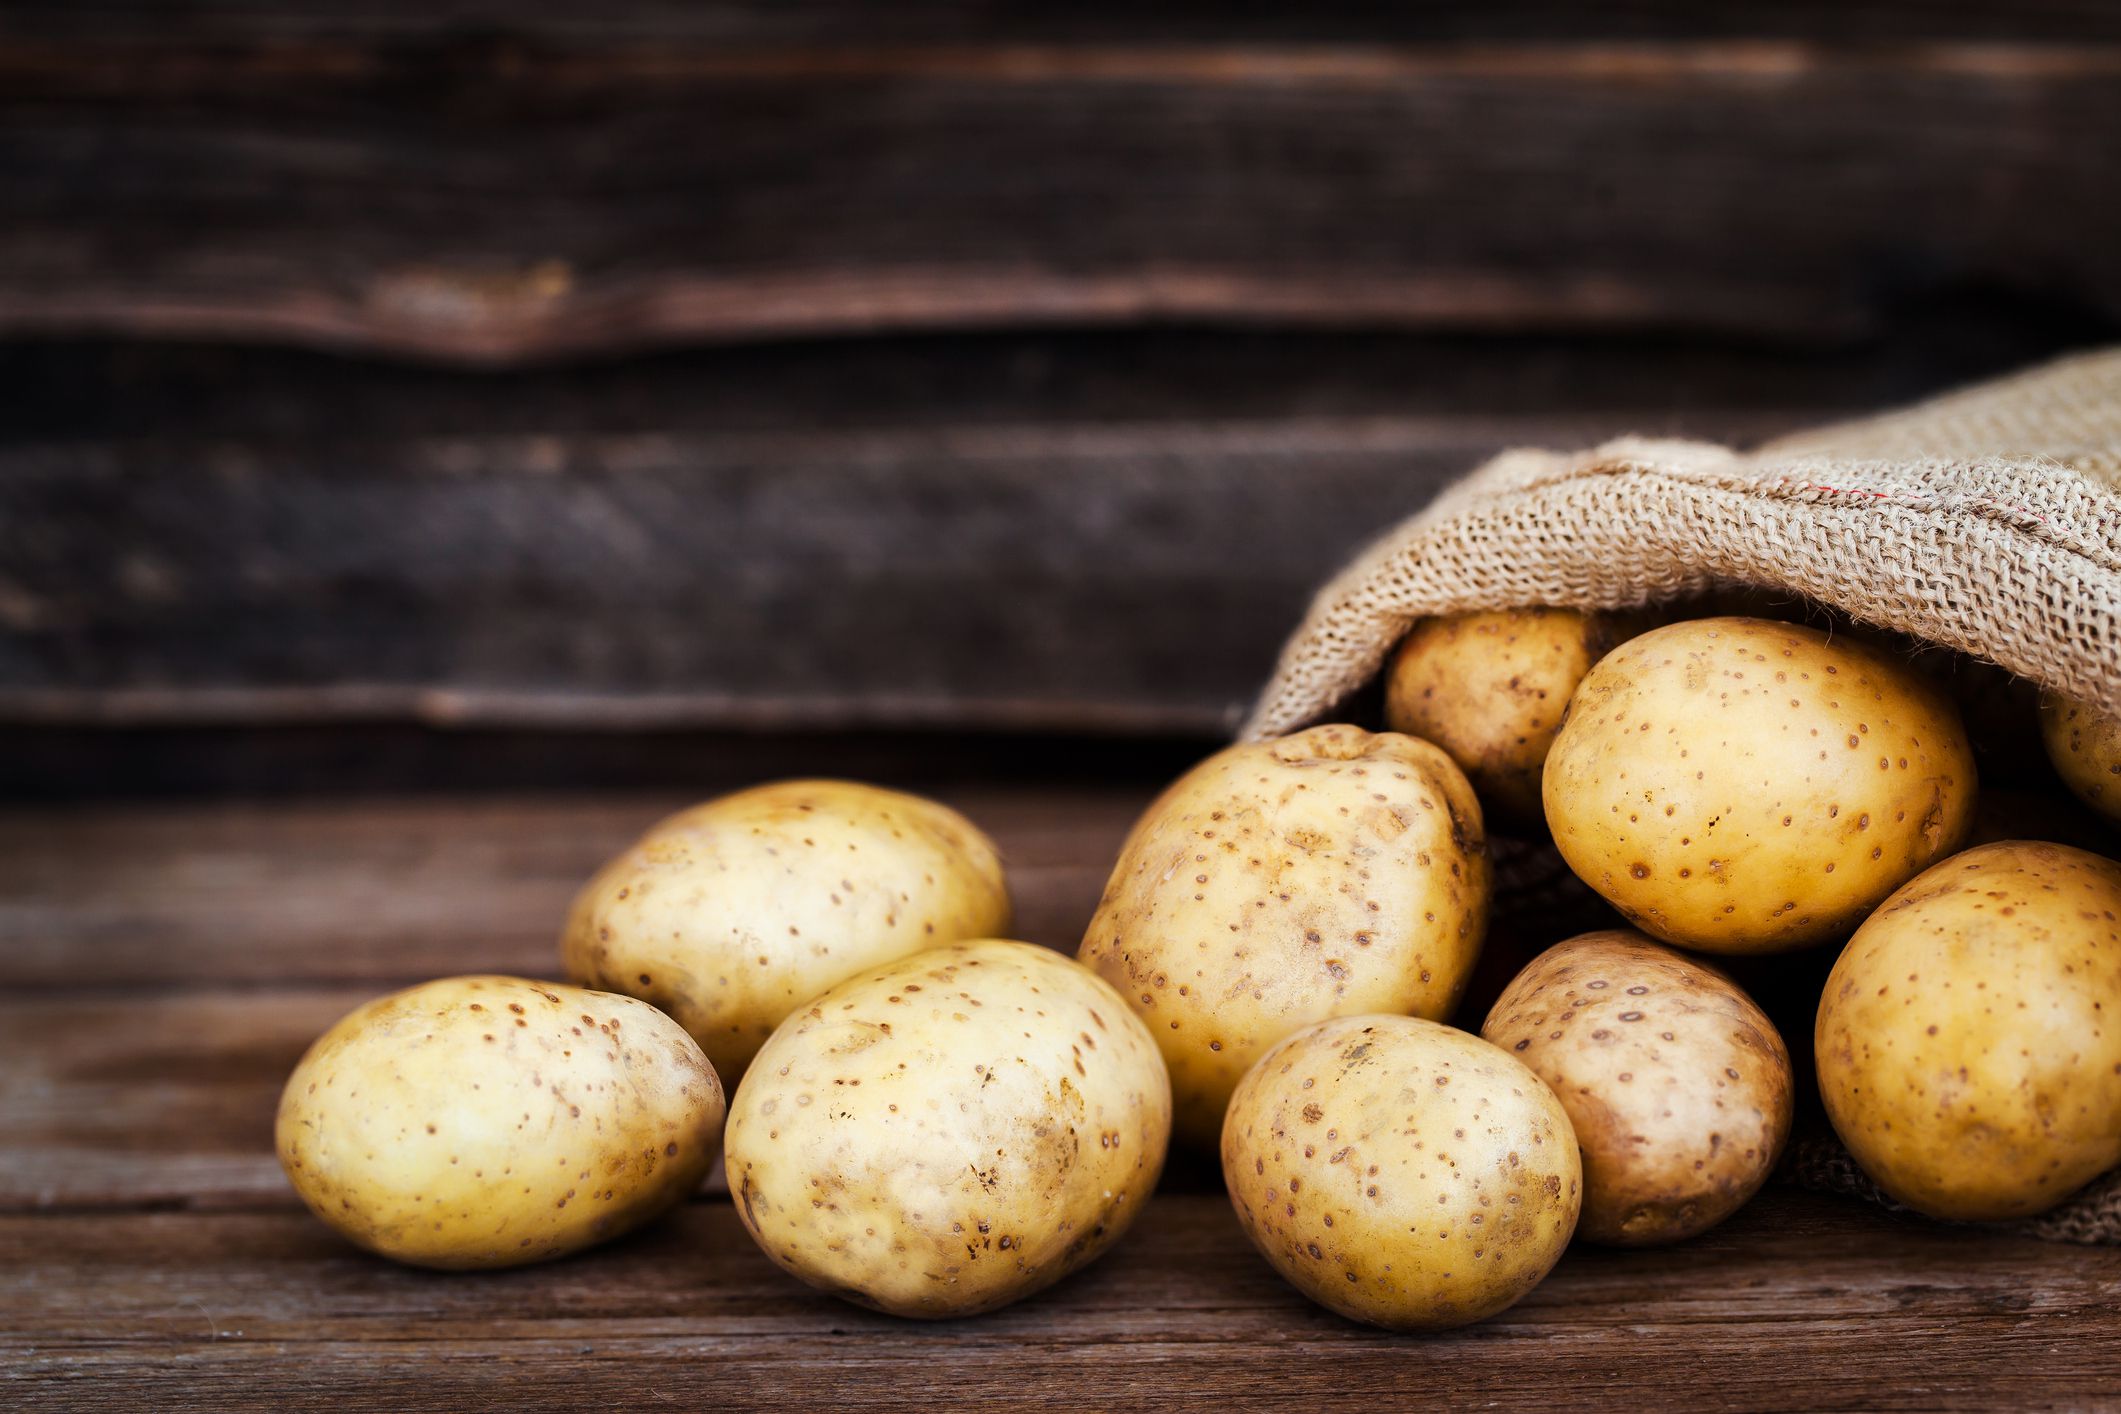 Potato health benefits bone health healthy person dietary supplement healthy skin energy dense dried fruit